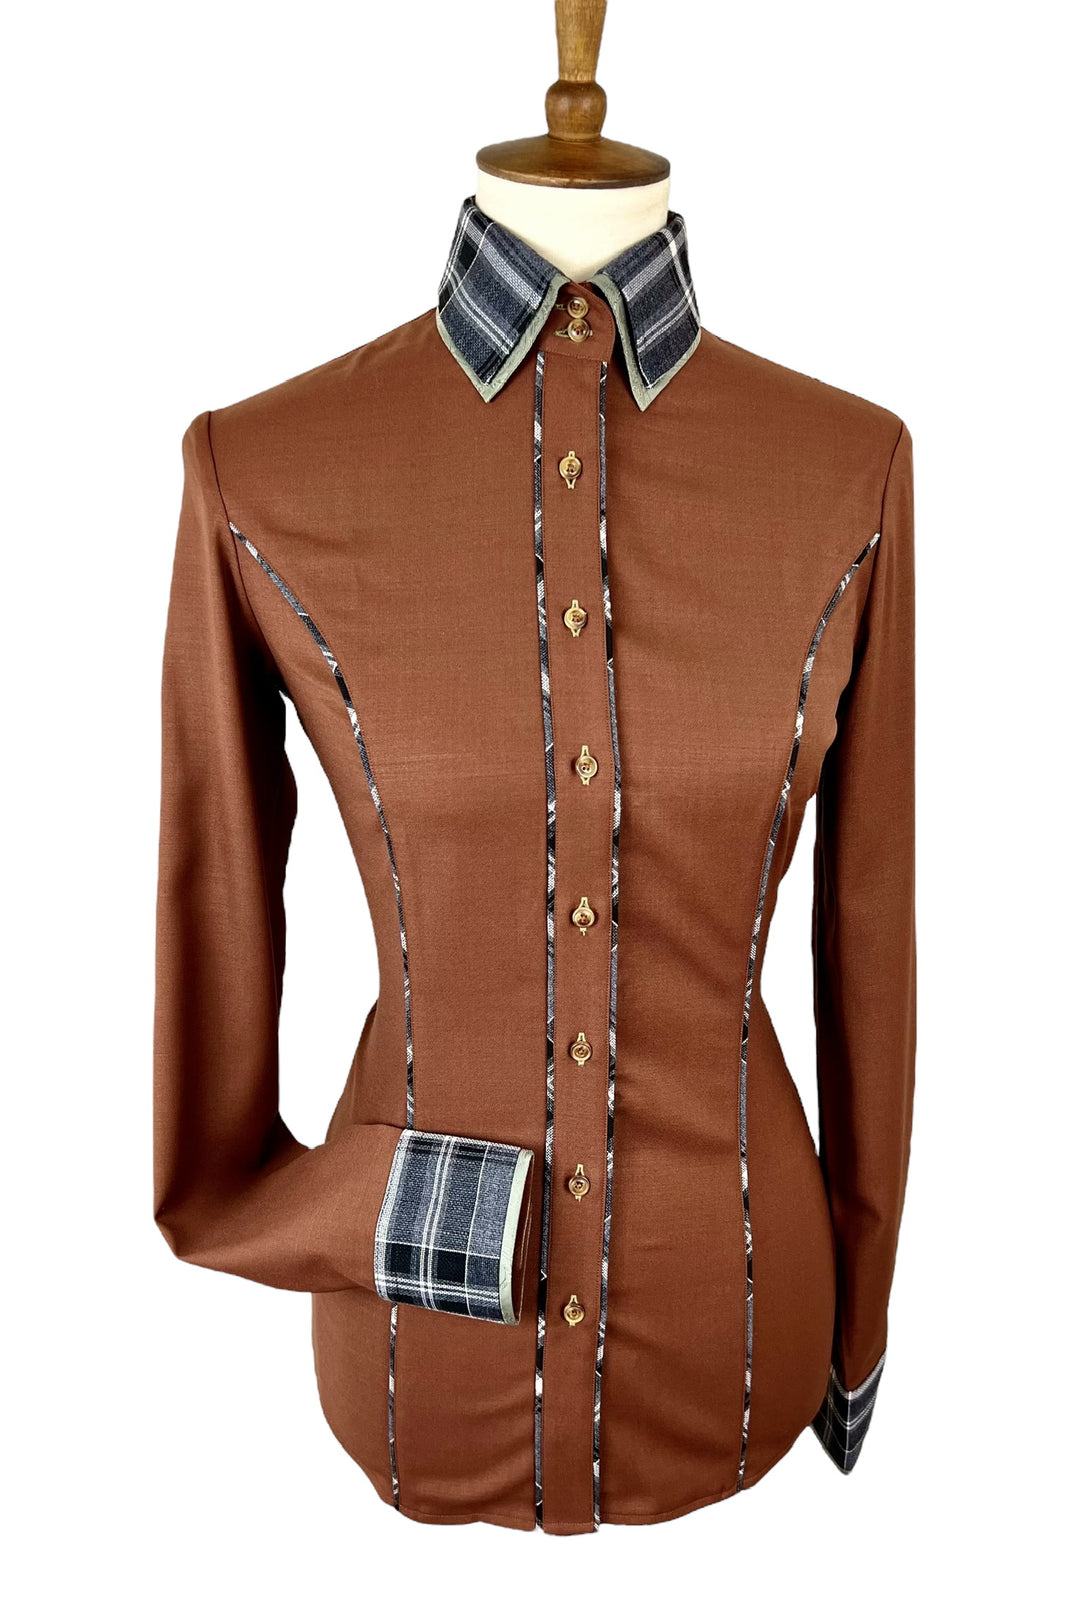 Rust, Black & Sage Western Shirt (Size 36)